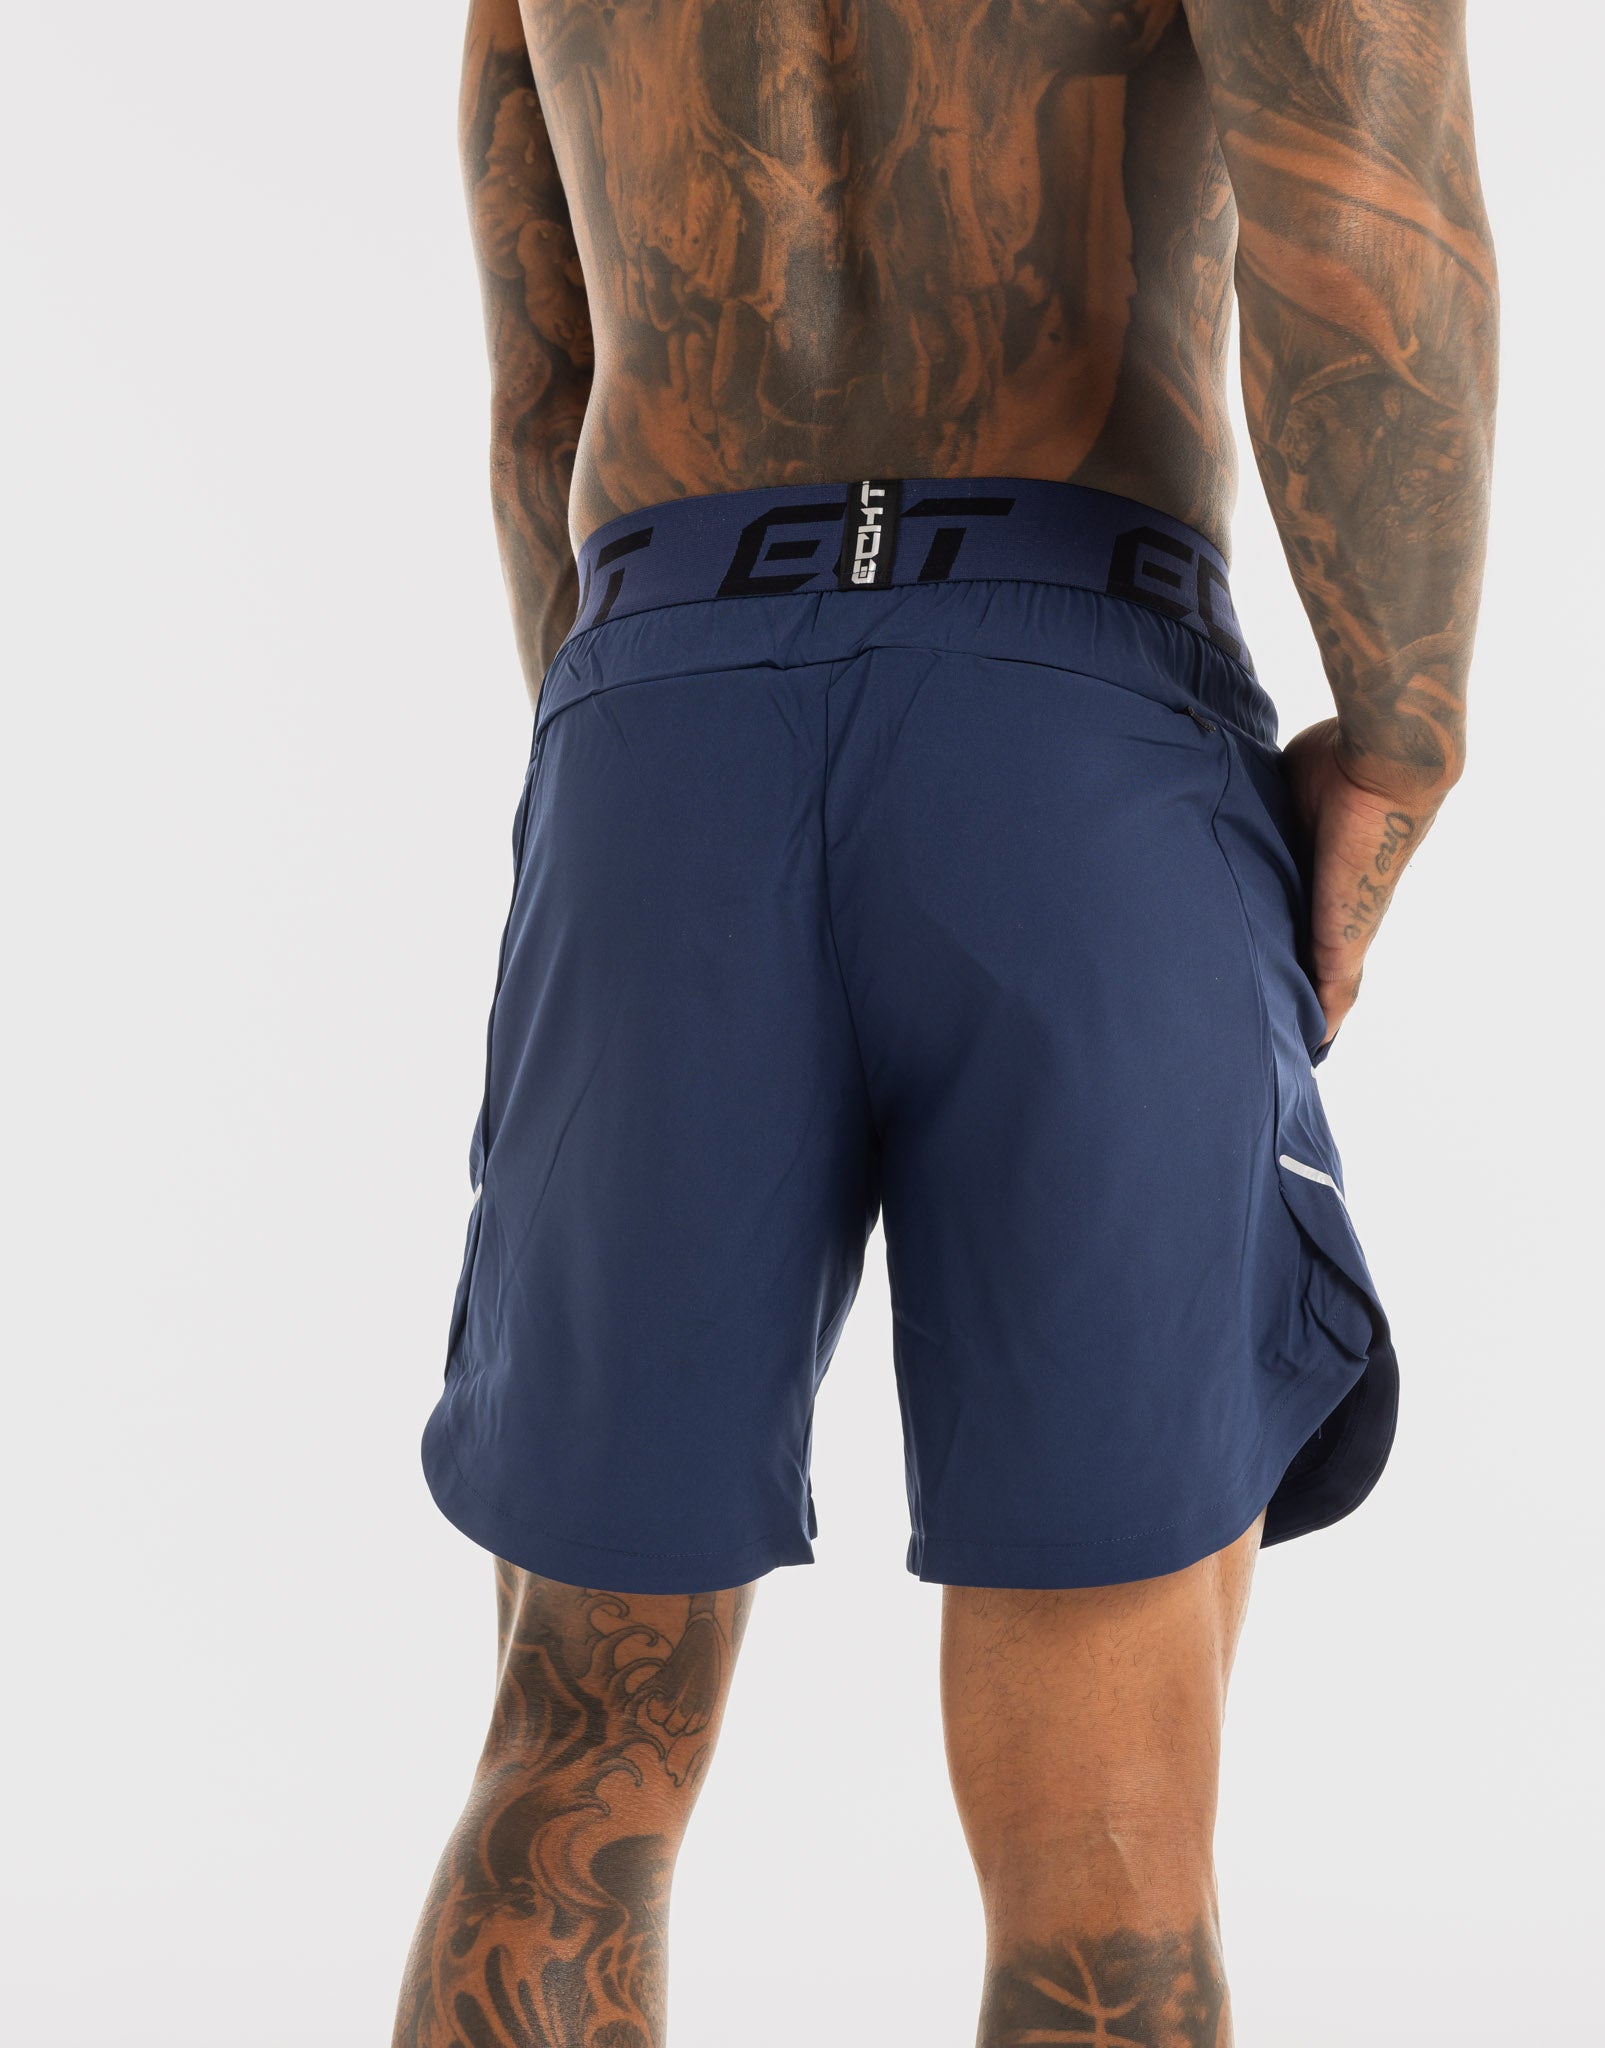 Ultimate Shorts - Navy